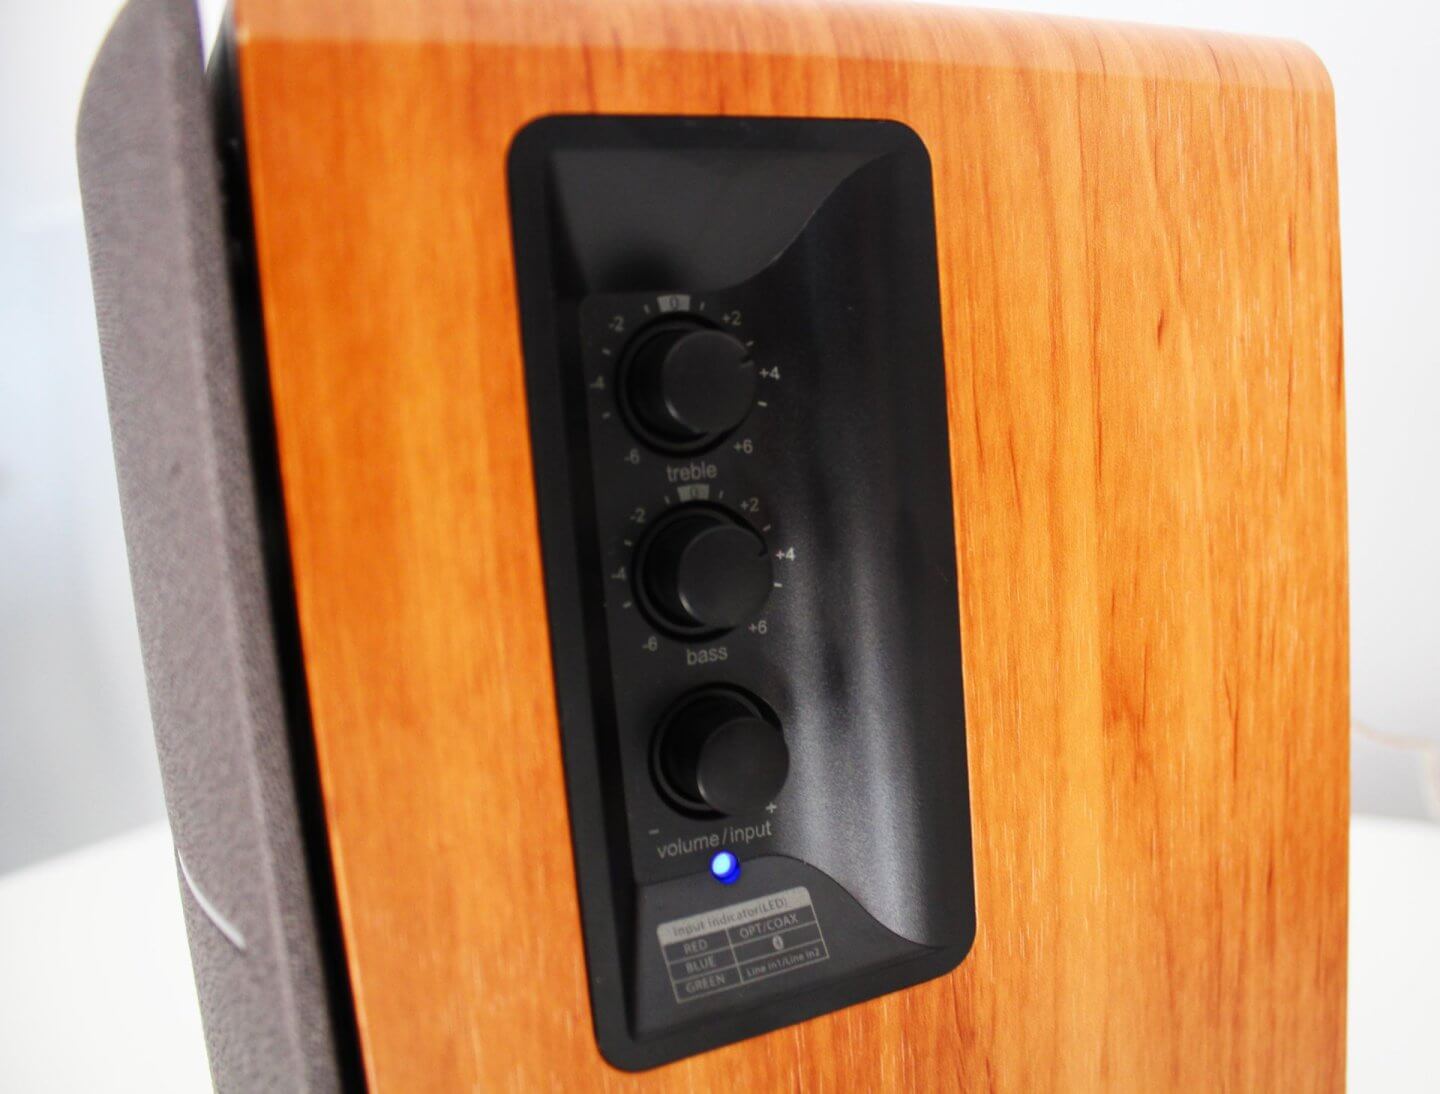 Edifier speaker volume, bass and treble controls. 